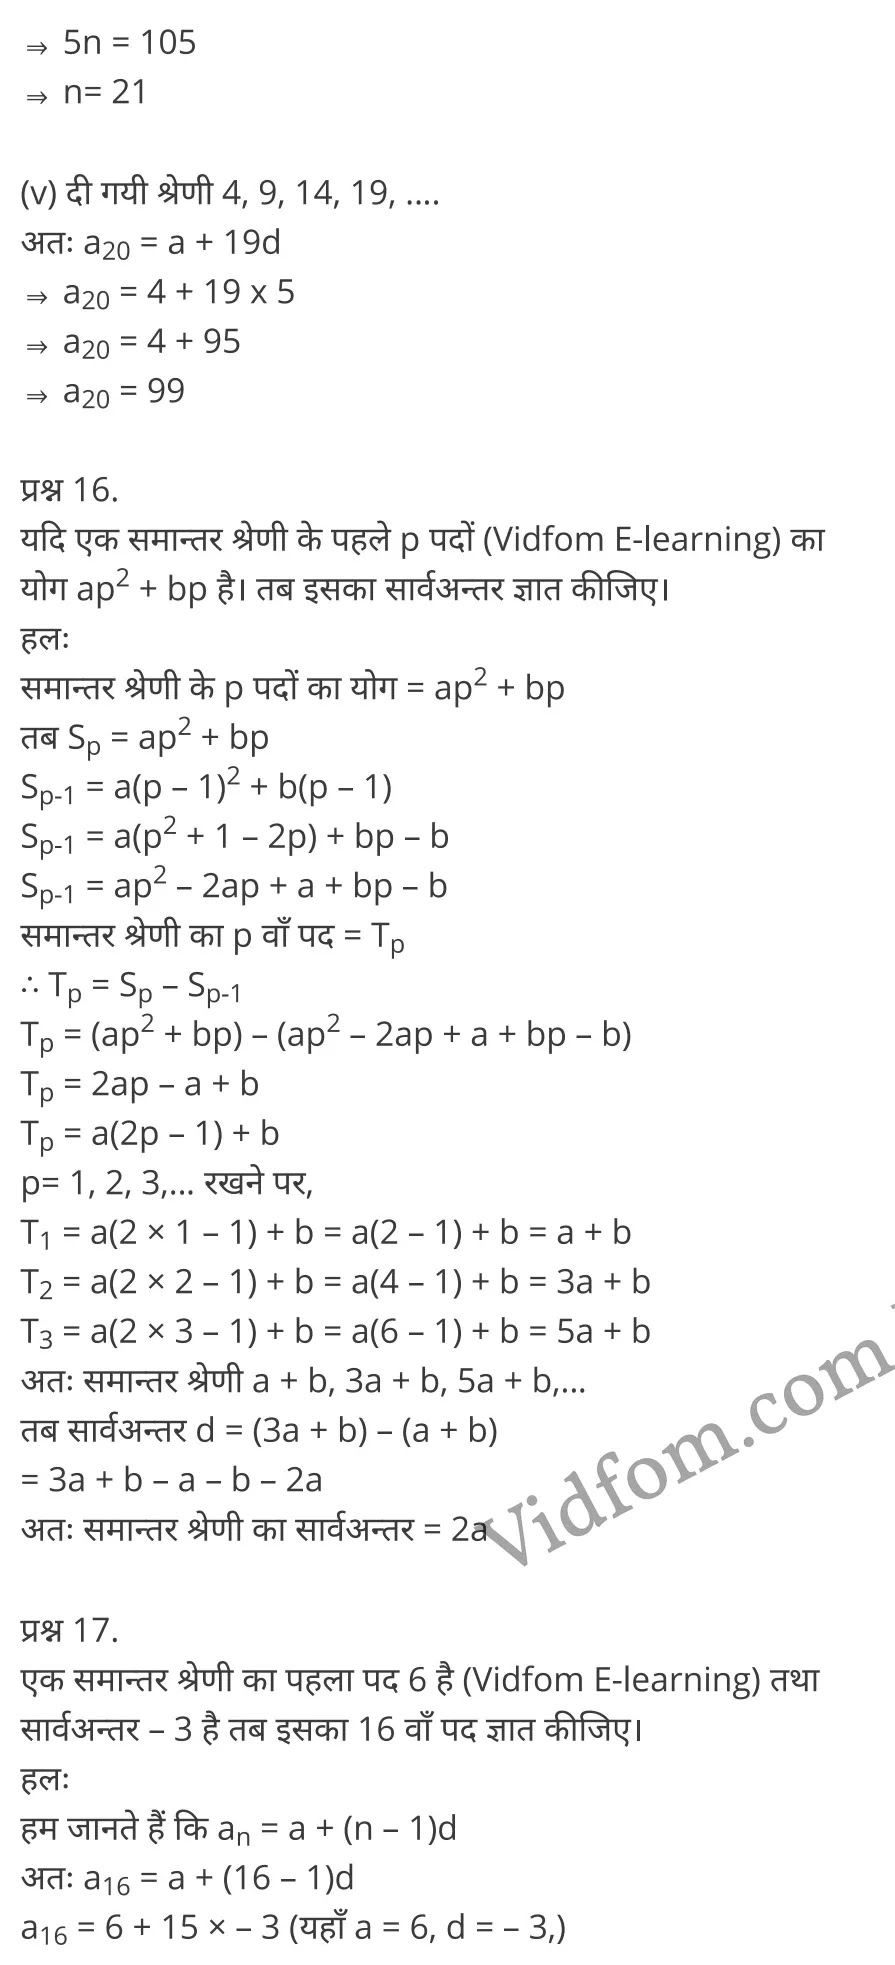 Chapter 5 Quadratic Equations Ex 5.1 Chapter 5 Quadratic Equations Ex 5.2 Chapter 5 Quadratic Equations Ex 5.3 Chapter 5 Quadratic Equations Ex 5.4 Chapter 5 Quadratic Equations Ex 5.5 कक्षा 10 बालाजी गणित  के नोट्स  हिंदी में एनसीईआरटी समाधान,     class 10 Balaji Maths Chapter 5,   class 10 Balaji Maths Chapter 5 ncert solutions in Hindi,   class 10 Balaji Maths Chapter 5 notes in hindi,   class 10 Balaji Maths Chapter 5 question answer,   class 10 Balaji Maths Chapter 5 notes,   class 10 Balaji Maths Chapter 5 class 10 Balaji Maths Chapter 5 in  hindi,    class 10 Balaji Maths Chapter 5 important questions in  hindi,   class 10 Balaji Maths Chapter 5 notes in hindi,    class 10 Balaji Maths Chapter 5 test,   class 10 Balaji Maths Chapter 5 pdf,   class 10 Balaji Maths Chapter 5 notes pdf,   class 10 Balaji Maths Chapter 5 exercise solutions,   class 10 Balaji Maths Chapter 5 notes study rankers,   class 10 Balaji Maths Chapter 5 notes,    class 10 Balaji Maths Chapter 5  class 10  notes pdf,   class 10 Balaji Maths Chapter 5 class 10  notes  ncert,   class 10 Balaji Maths Chapter 5 class 10 pdf,   class 10 Balaji Maths Chapter 5  book,   class 10 Balaji Maths Chapter 5 quiz class 10  ,    10  th class 10 Balaji Maths Chapter 5  book up board,   up board 10  th class 10 Balaji Maths Chapter 5 notes,  class 10 Balaji Maths,   class 10 Balaji Maths ncert solutions in Hindi,   class 10 Balaji Maths notes in hindi,   class 10 Balaji Maths question answer,   class 10 Balaji Maths notes,  class 10 Balaji Maths class 10 Balaji Maths Chapter 5 in  hindi,    class 10 Balaji Maths important questions in  hindi,   class 10 Balaji Maths notes in hindi,    class 10 Balaji Maths test,  class 10 Balaji Maths class 10 Balaji Maths Chapter 5 pdf,   class 10 Balaji Maths notes pdf,   class 10 Balaji Maths exercise solutions,   class 10 Balaji Maths,  class 10 Balaji Maths notes study rankers,   class 10 Balaji Maths notes,  class 10 Balaji Maths notes,   class 10 Balaji Maths  class 10  notes pdf,   class 10 Balaji Maths class 10  notes  ncert,   class 10 Balaji Maths class 10 pdf,   class 10 Balaji Maths  book,  class 10 Balaji Maths quiz class 10  ,  10  th class 10 Balaji Maths    book up board,    up board 10  th class 10 Balaji Maths notes,      कक्षा 10 बालाजी गणित अध्याय 5 ,  कक्षा 10 बालाजी गणित, कक्षा 10 बालाजी गणित अध्याय 5  के नोट्स हिंदी में,  कक्षा 10 का हिंदी अध्याय 5 का प्रश्न उत्तर,  कक्षा 10 बालाजी गणित अध्याय 5  के नोट्स,  10 कक्षा बालाजी गणित  हिंदी में, कक्षा 10 बालाजी गणित अध्याय 5  हिंदी में,  कक्षा 10 बालाजी गणित अध्याय 5  महत्वपूर्ण प्रश्न हिंदी में, कक्षा 10   हिंदी के नोट्स  हिंदी में, बालाजी गणित हिंदी में  कक्षा 10 नोट्स pdf,    बालाजी गणित हिंदी में  कक्षा 10 नोट्स 2021 ncert,   बालाजी गणित हिंदी  कक्षा 10 pdf,   बालाजी गणित हिंदी में  पुस्तक,   बालाजी गणित हिंदी में की बुक,   बालाजी गणित हिंदी में  प्रश्नोत्तरी class 10 ,  बिहार बोर्ड 10  पुस्तक वीं हिंदी नोट्स,    बालाजी गणित कक्षा 10 नोट्स 2021 ncert,   बालाजी गणित  कक्षा 10 pdf,   बालाजी गणित  पुस्तक,   बालाजी गणित  प्रश्नोत्तरी class 10, कक्षा 10 बालाजी गणित,  कक्षा 10 बालाजी गणित  के नोट्स हिंदी में,  कक्षा 10 का हिंदी का प्रश्न उत्तर,  कक्षा 10 बालाजी गणित  के नोट्स,  10 कक्षा हिंदी 2021  हिंदी में, कक्षा 10 बालाजी गणित  हिंदी में,  कक्षा 10 बालाजी गणित  महत्वपूर्ण प्रश्न हिंदी में, कक्षा 10 बालाजी गणित  नोट्स  हिंदी में,